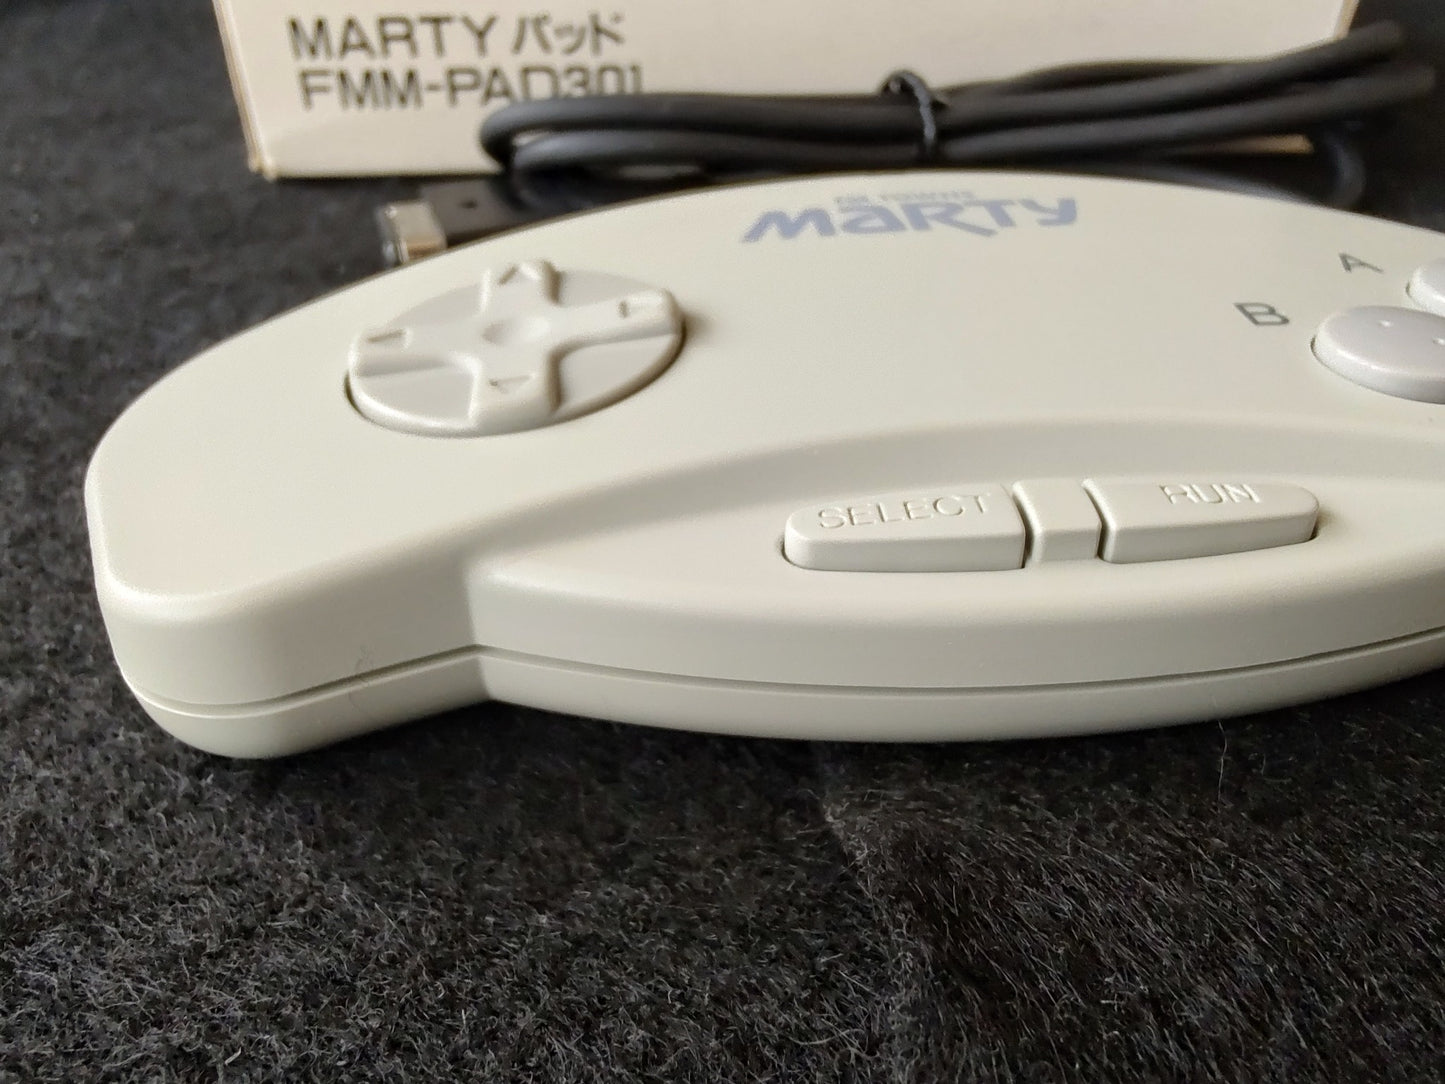 FUJITSU FM Towns /MARTY Original controller pad FMT-PD301 w/Box, Working-f0709-